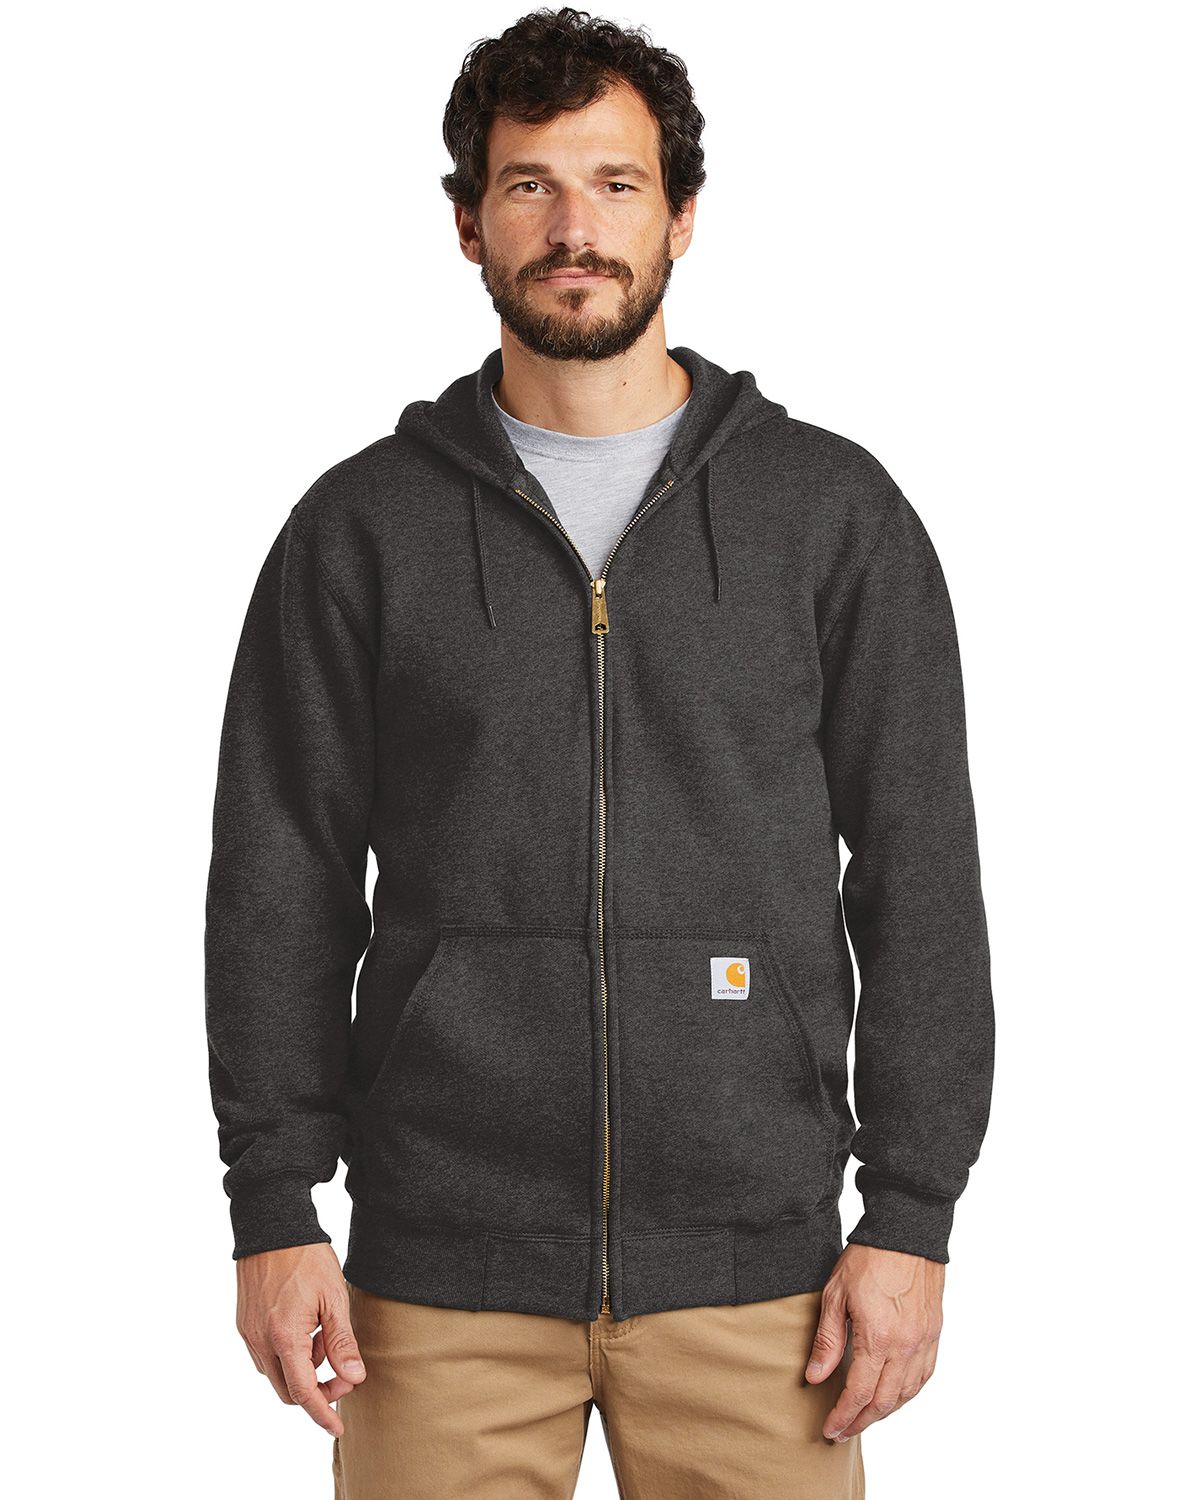 Carhartt CTK122 Midweight Hooded Zip-Front Sweatshirt for Business Uniforms